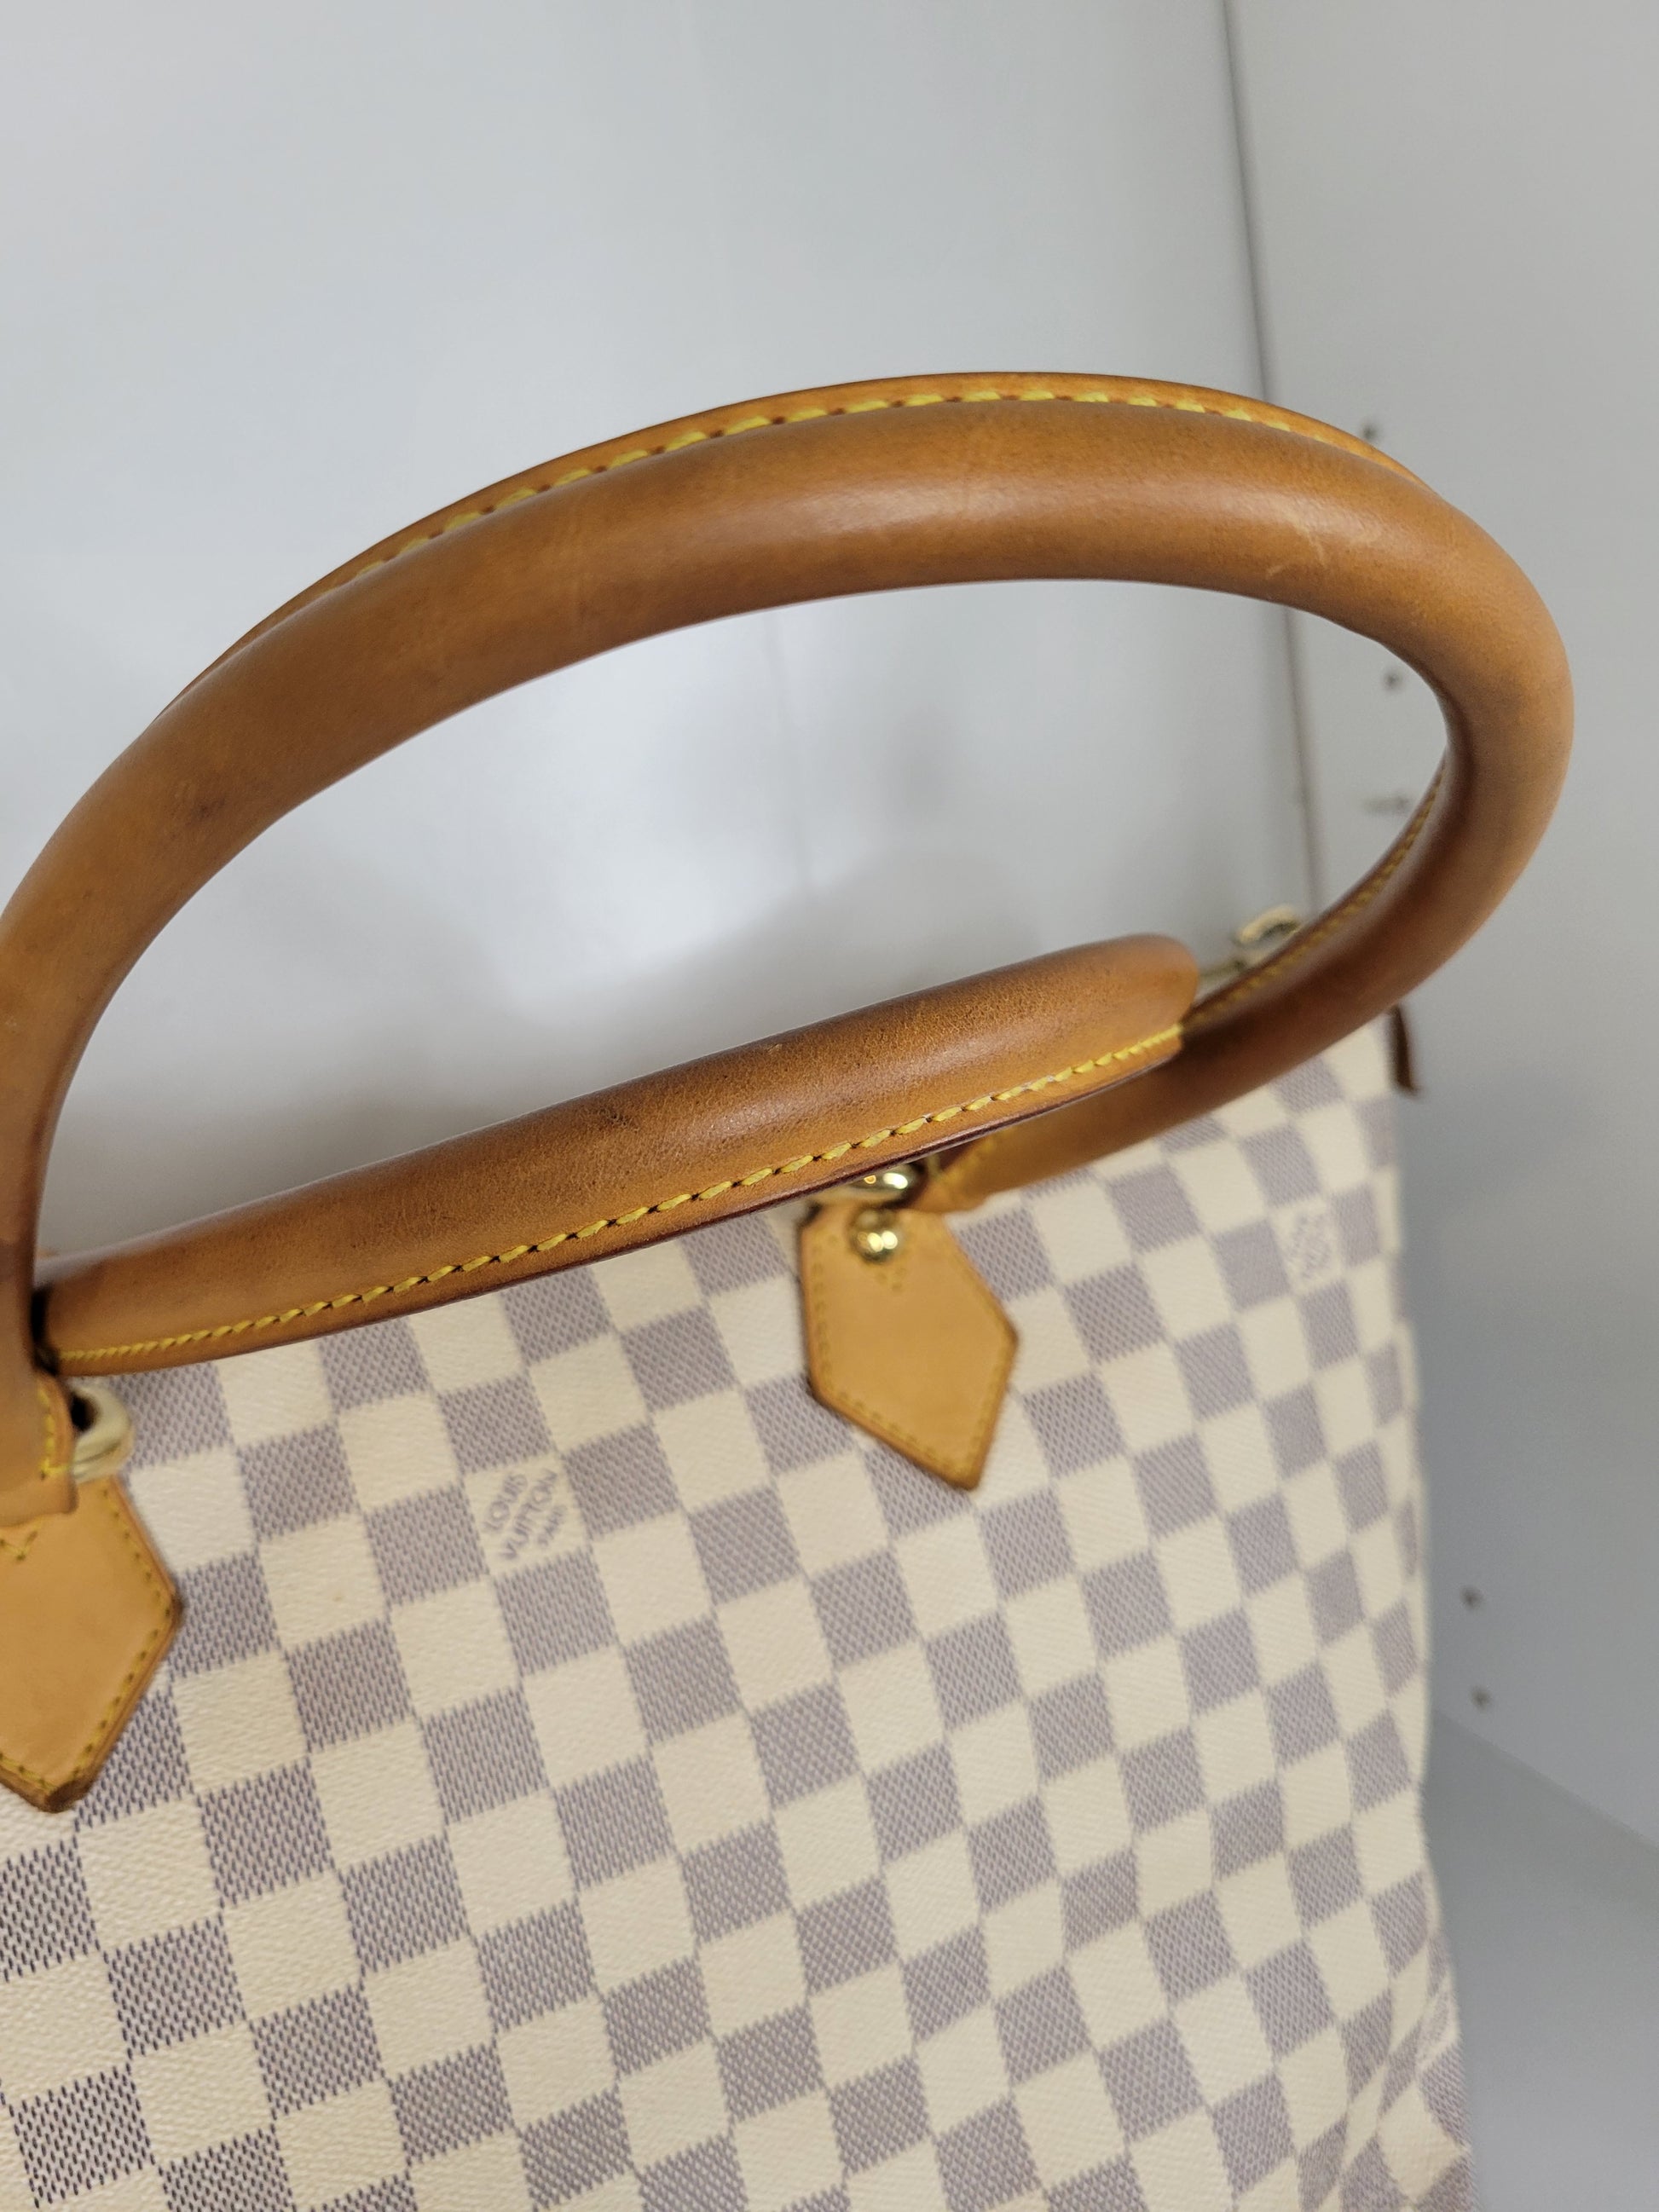 Louis Vuitton Damier Azur Saleya Bag